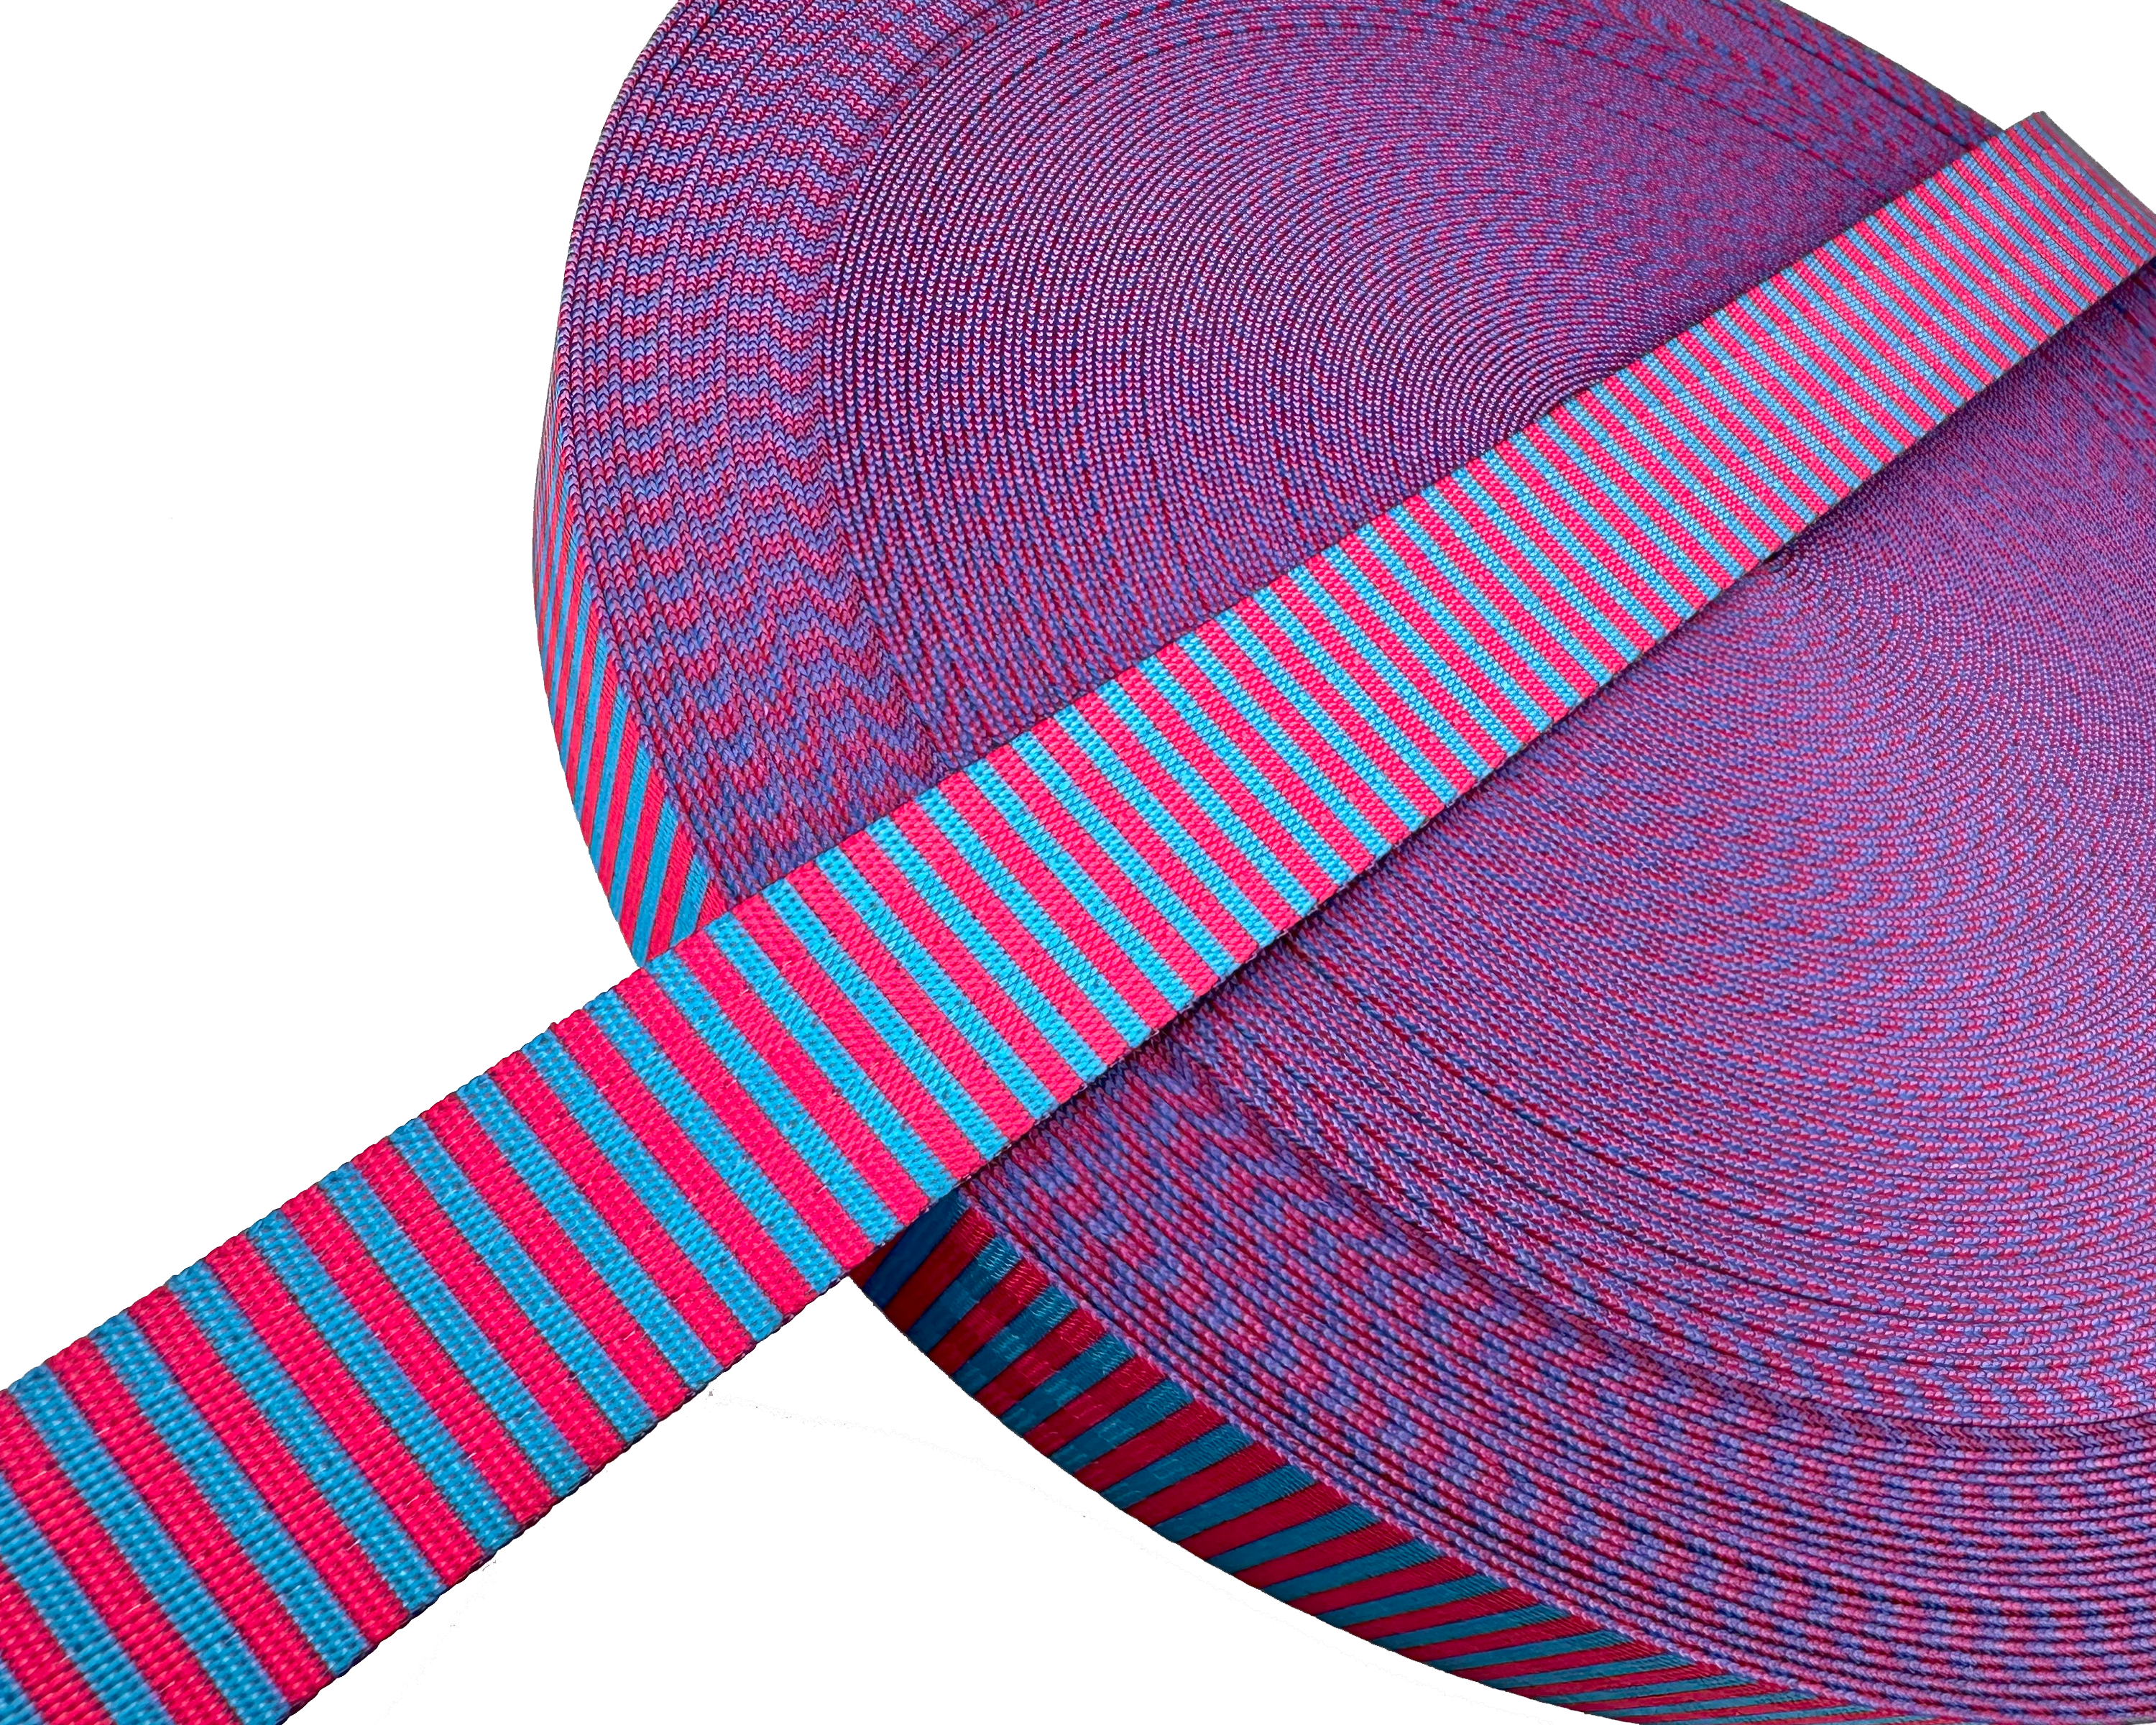 25mm Pink and Blue Stripe Webbing Straps for Bag Making